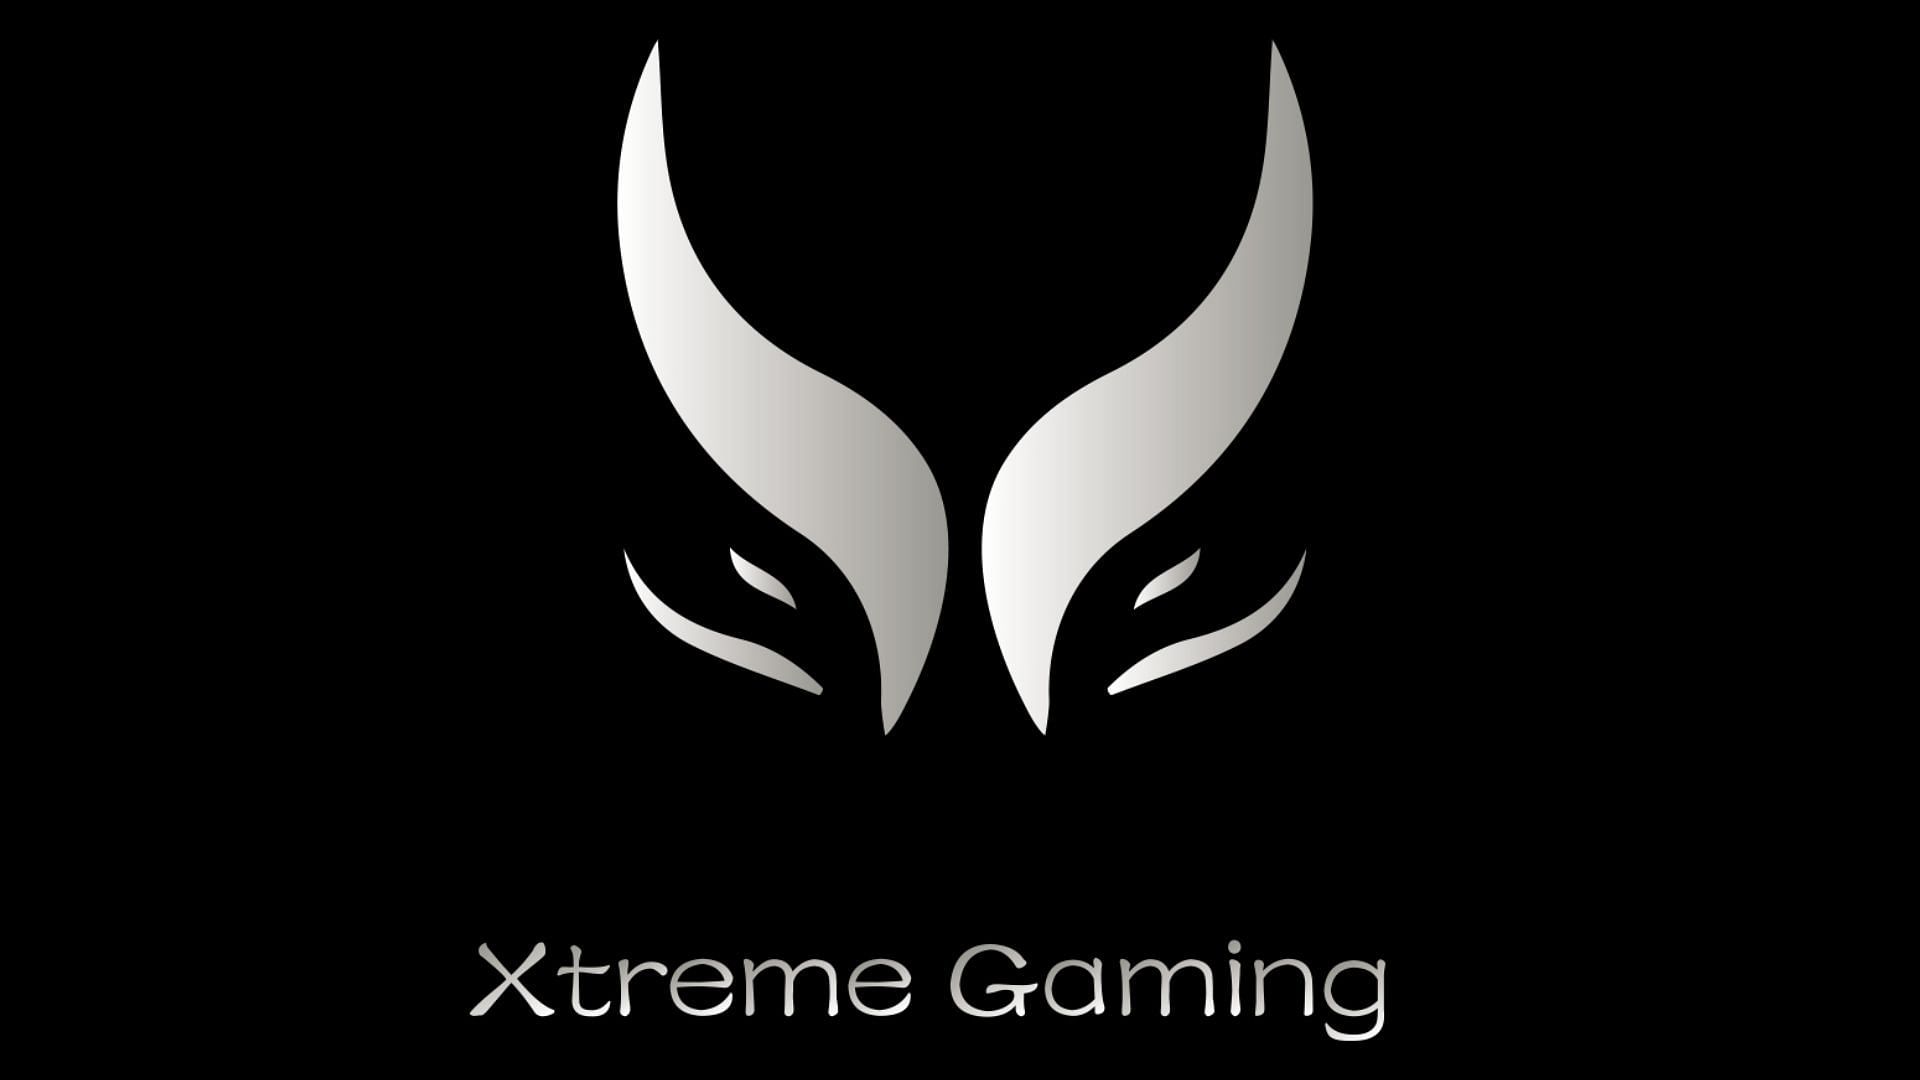 Xtreme Gaming&#039;s official logo (Image via Xtreme Gaming)